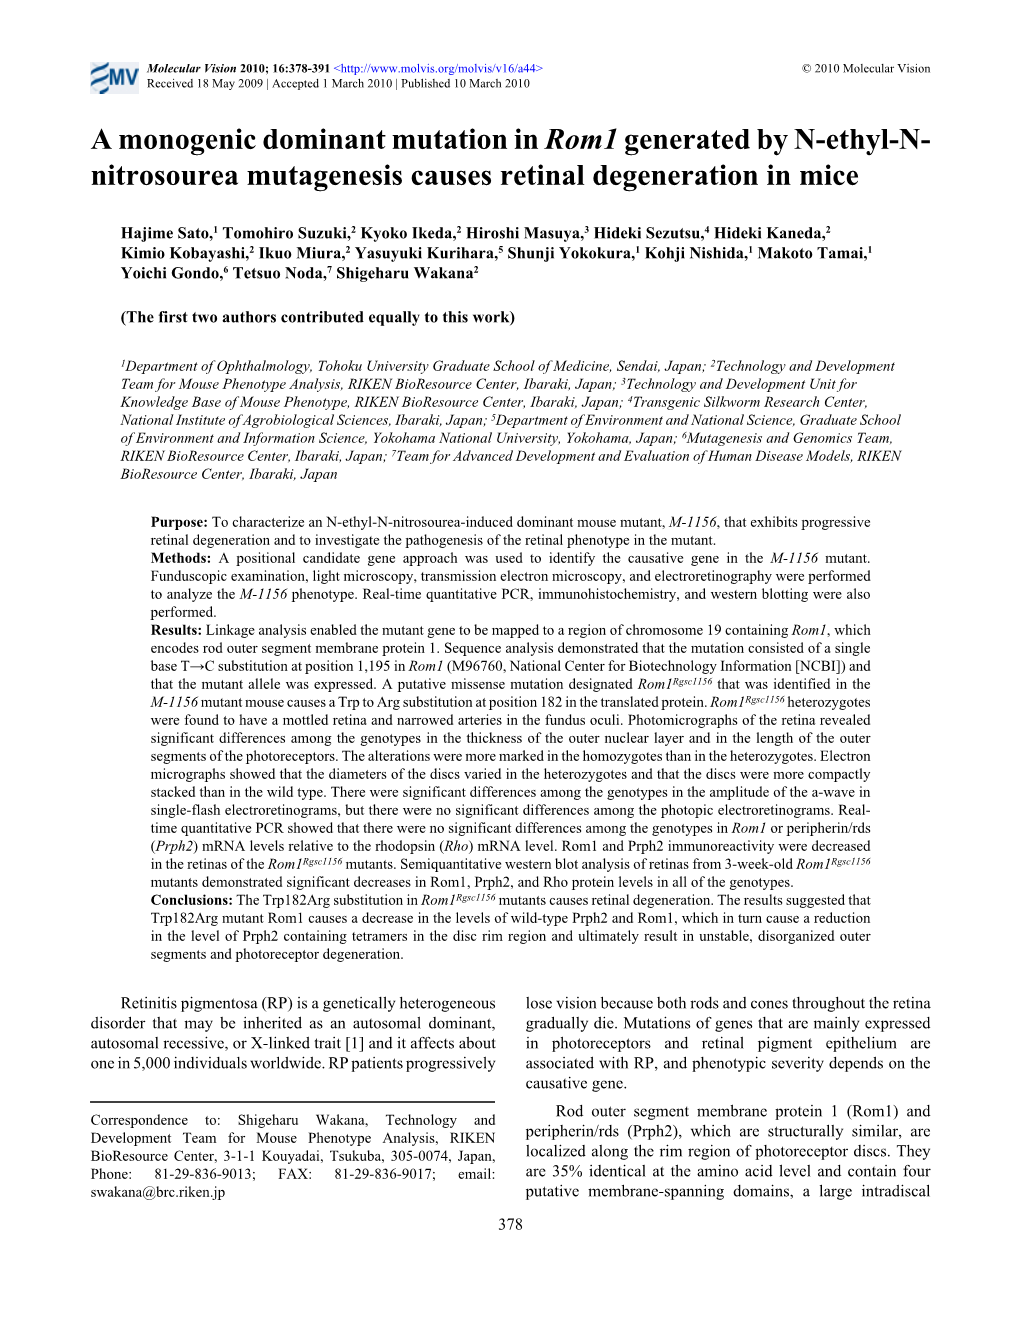 Nitrosourea Mutagenesis Causes Retinal Degeneration in Mice